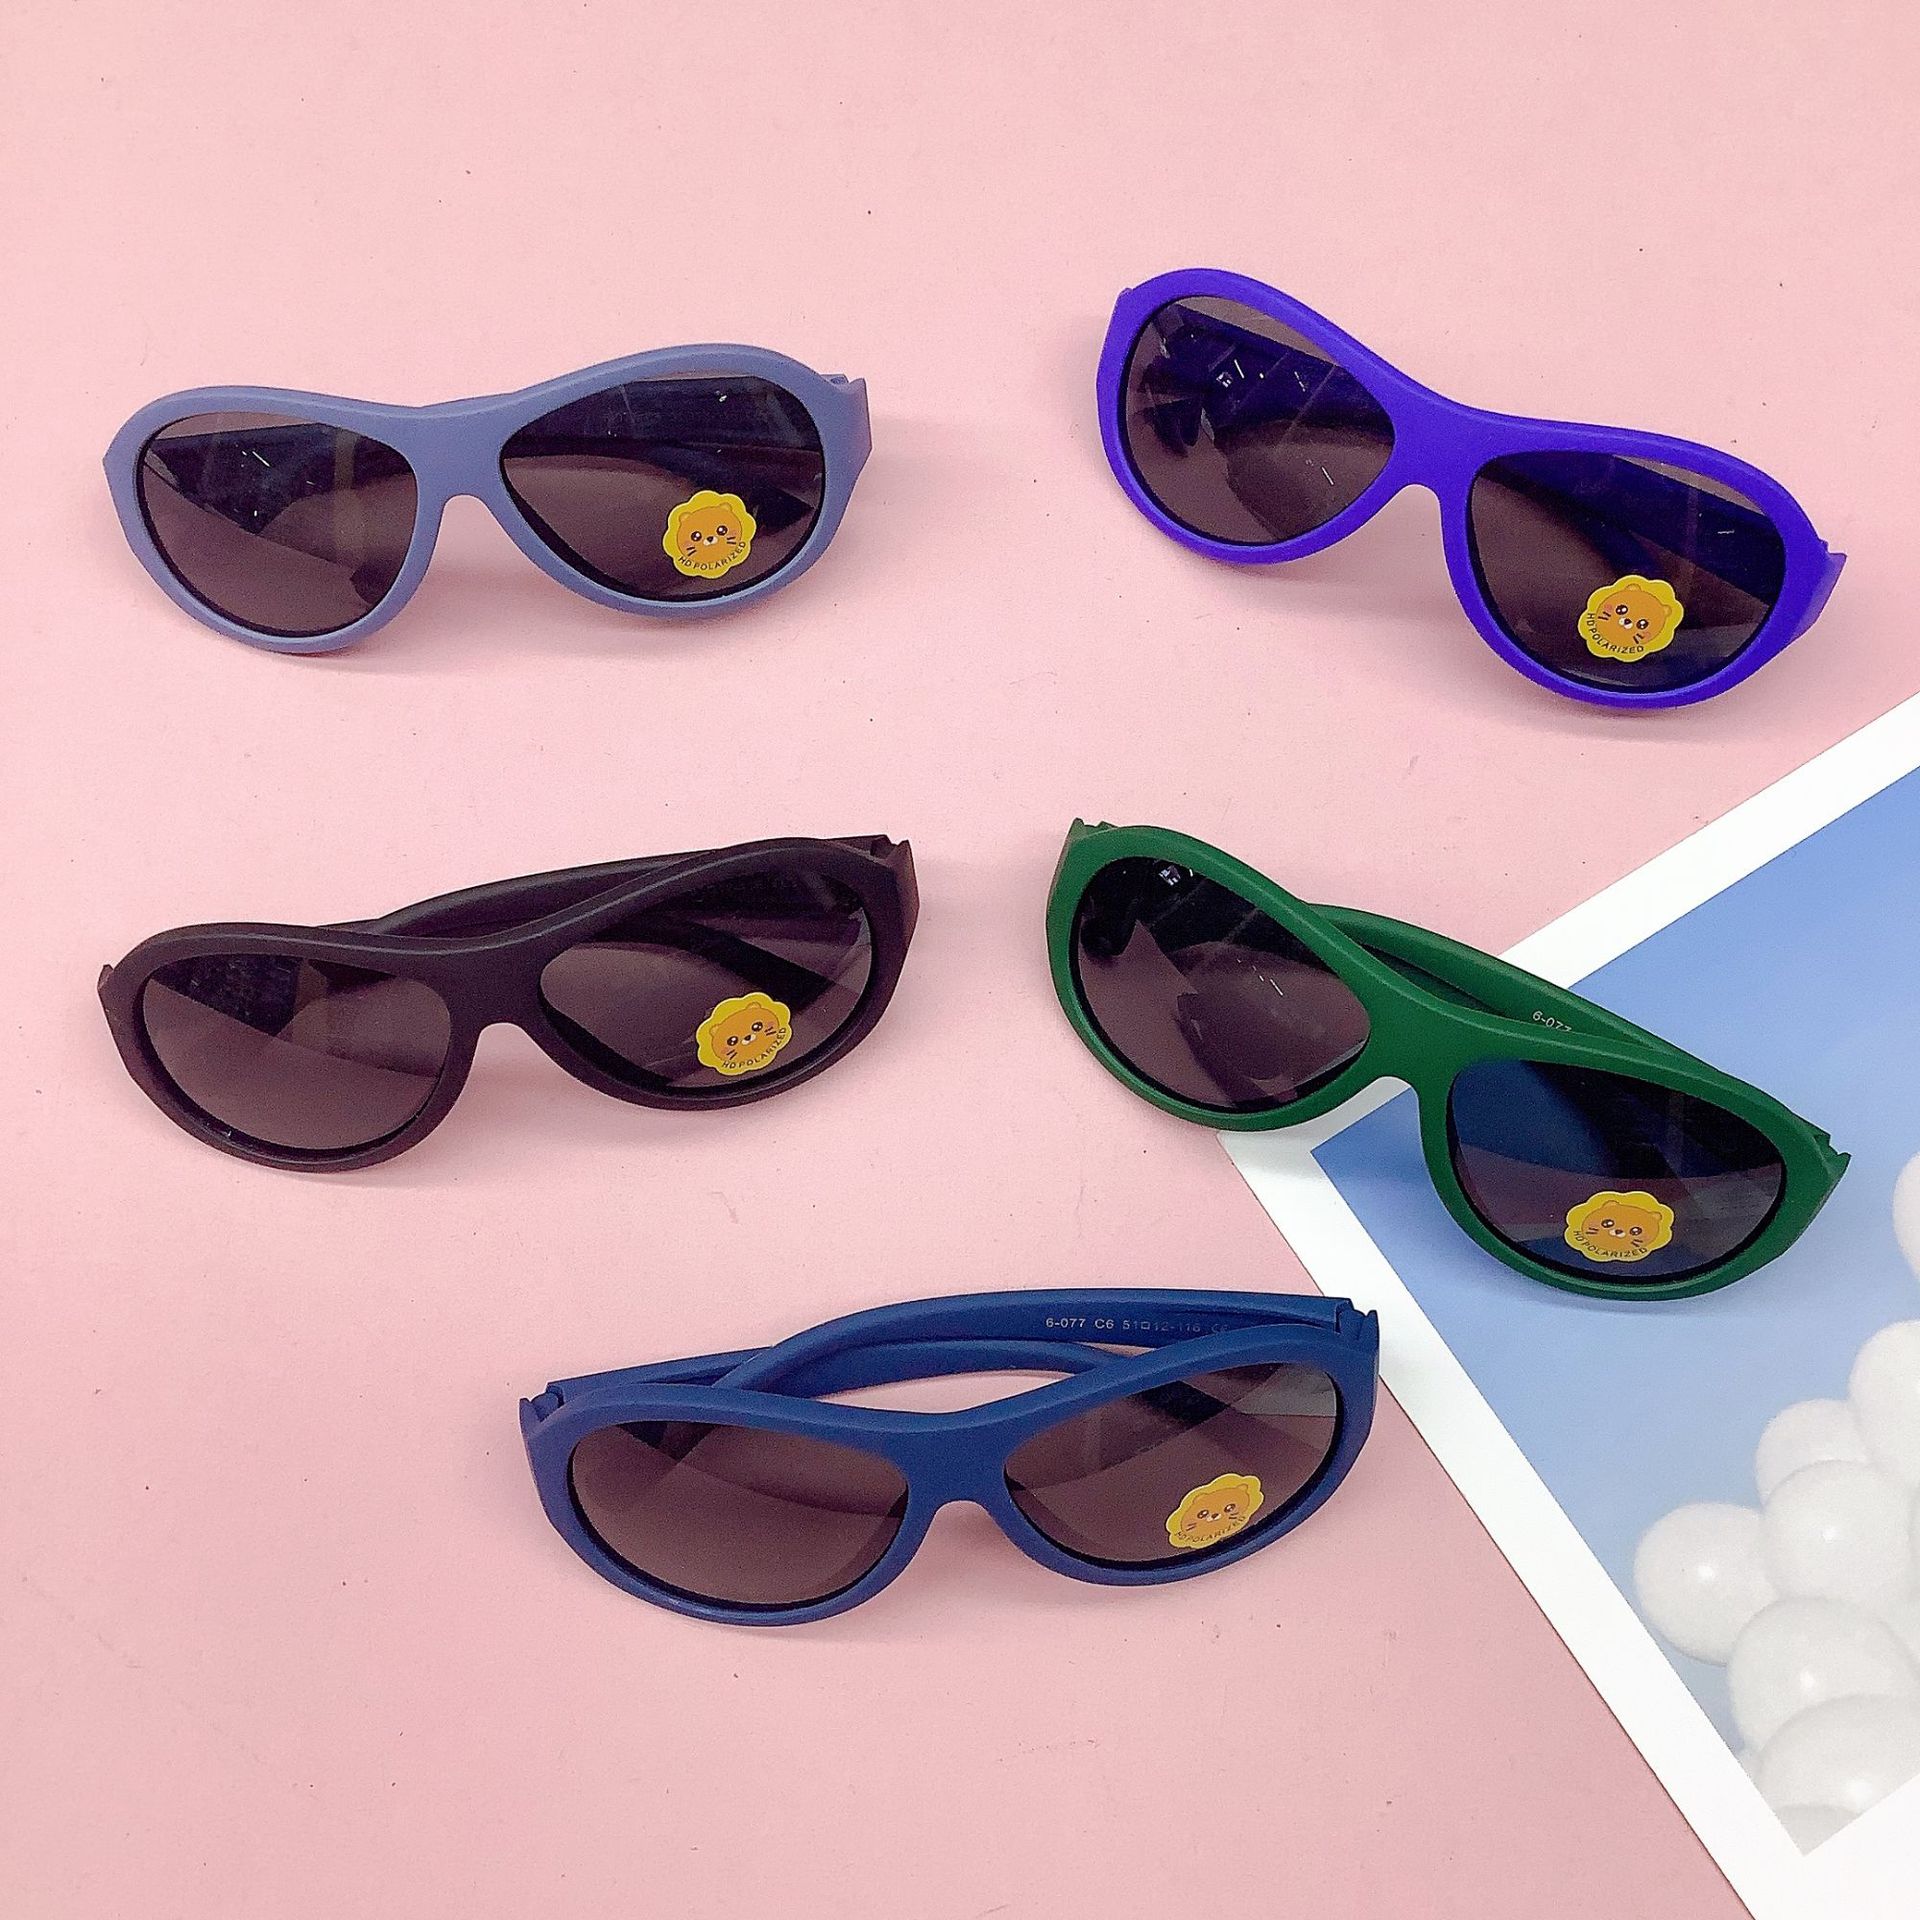 New Kids Sunglasses Travel UV Protection Cross-Border Silicone Polarized Eye Protection Photo Fashion Baby Sunglasses Fashion